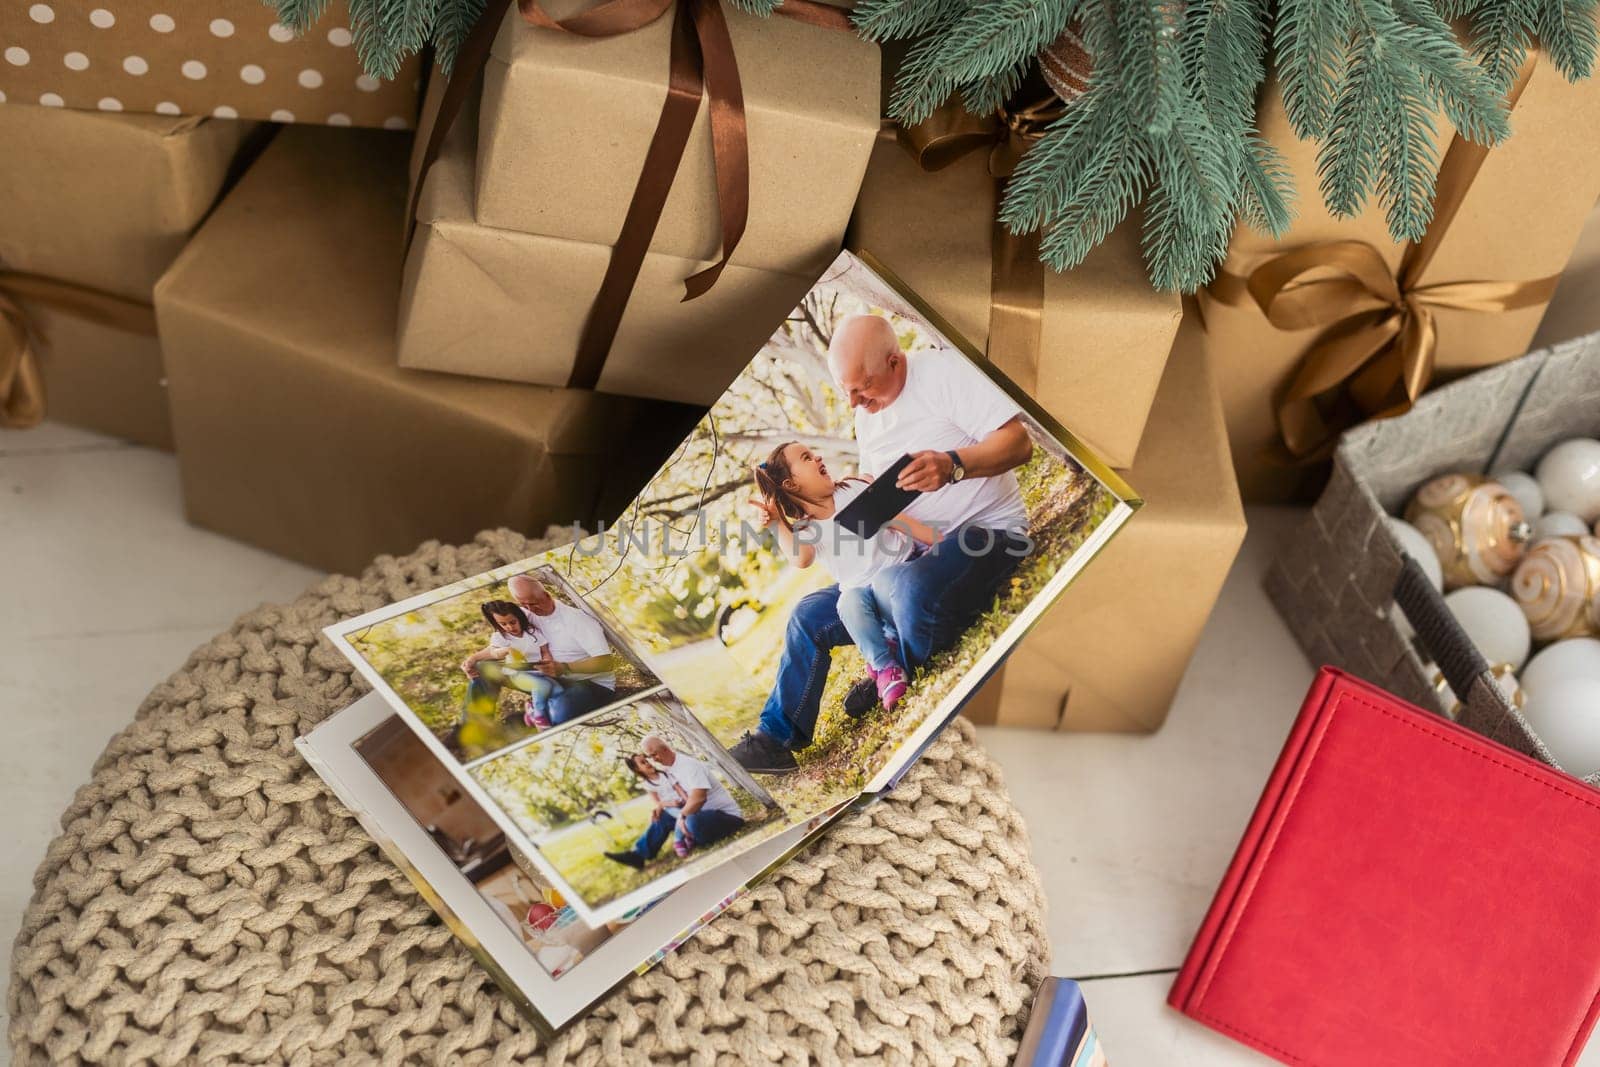 a photo album near the Christmas tree as a gift